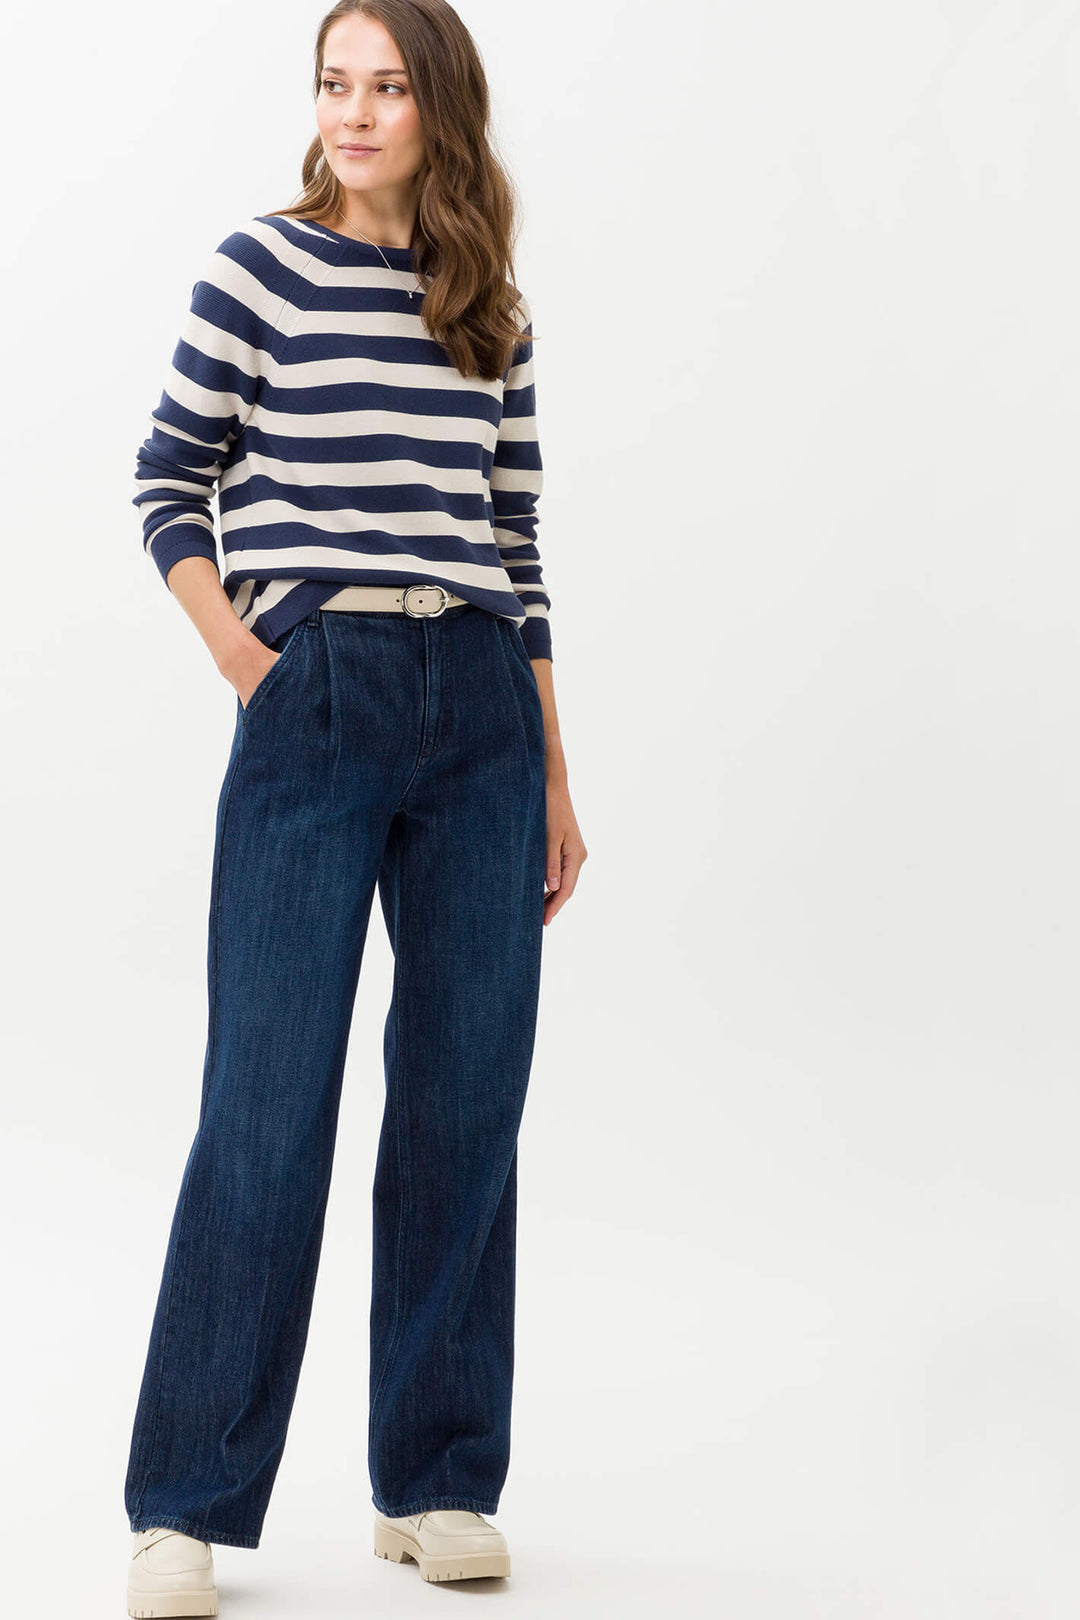 Brax 32-4018 23 Lesley Indigo Blue Stripe Long Sleeve Cotton Jumper - Shirley Allum Boutique